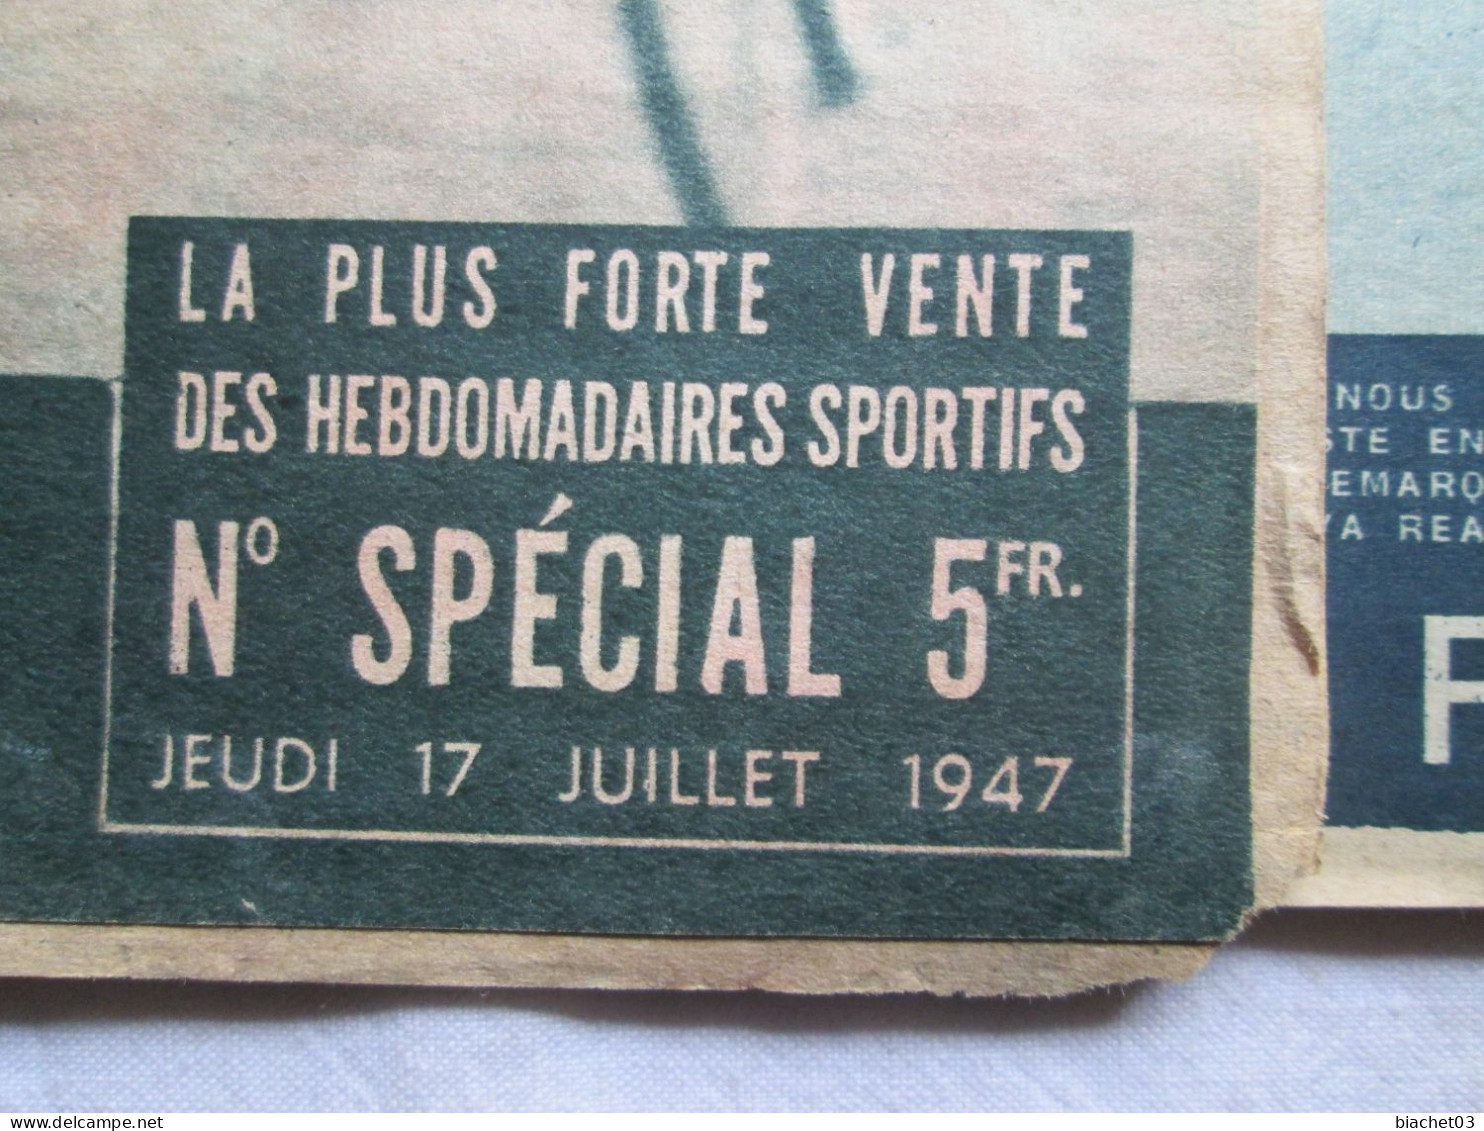 miroir sprint 1947  57 magazines dont 8 spécial